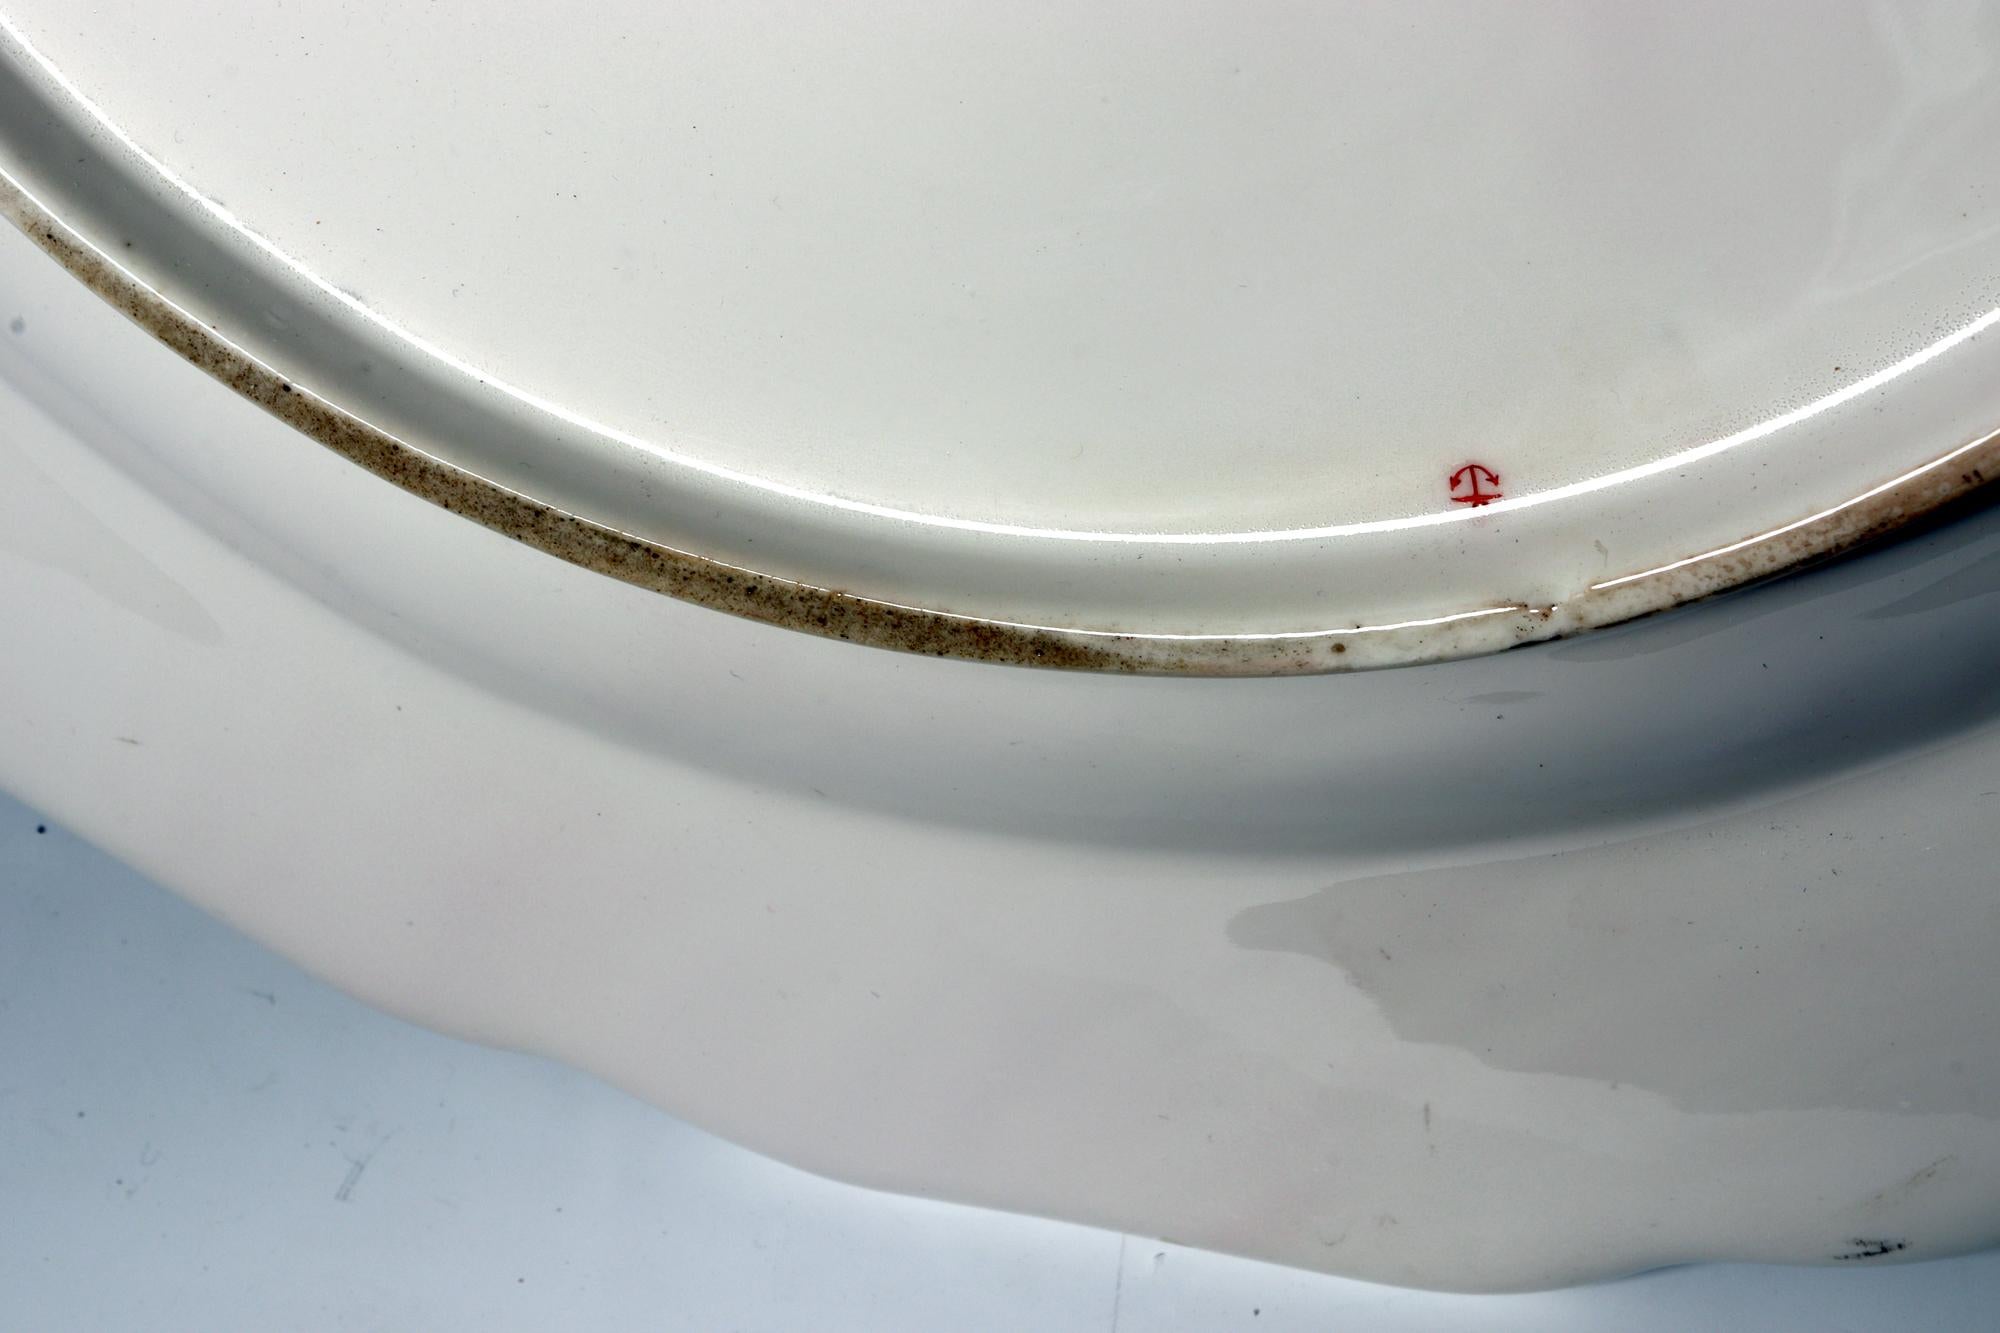 18th century chelsea porcelain for sale